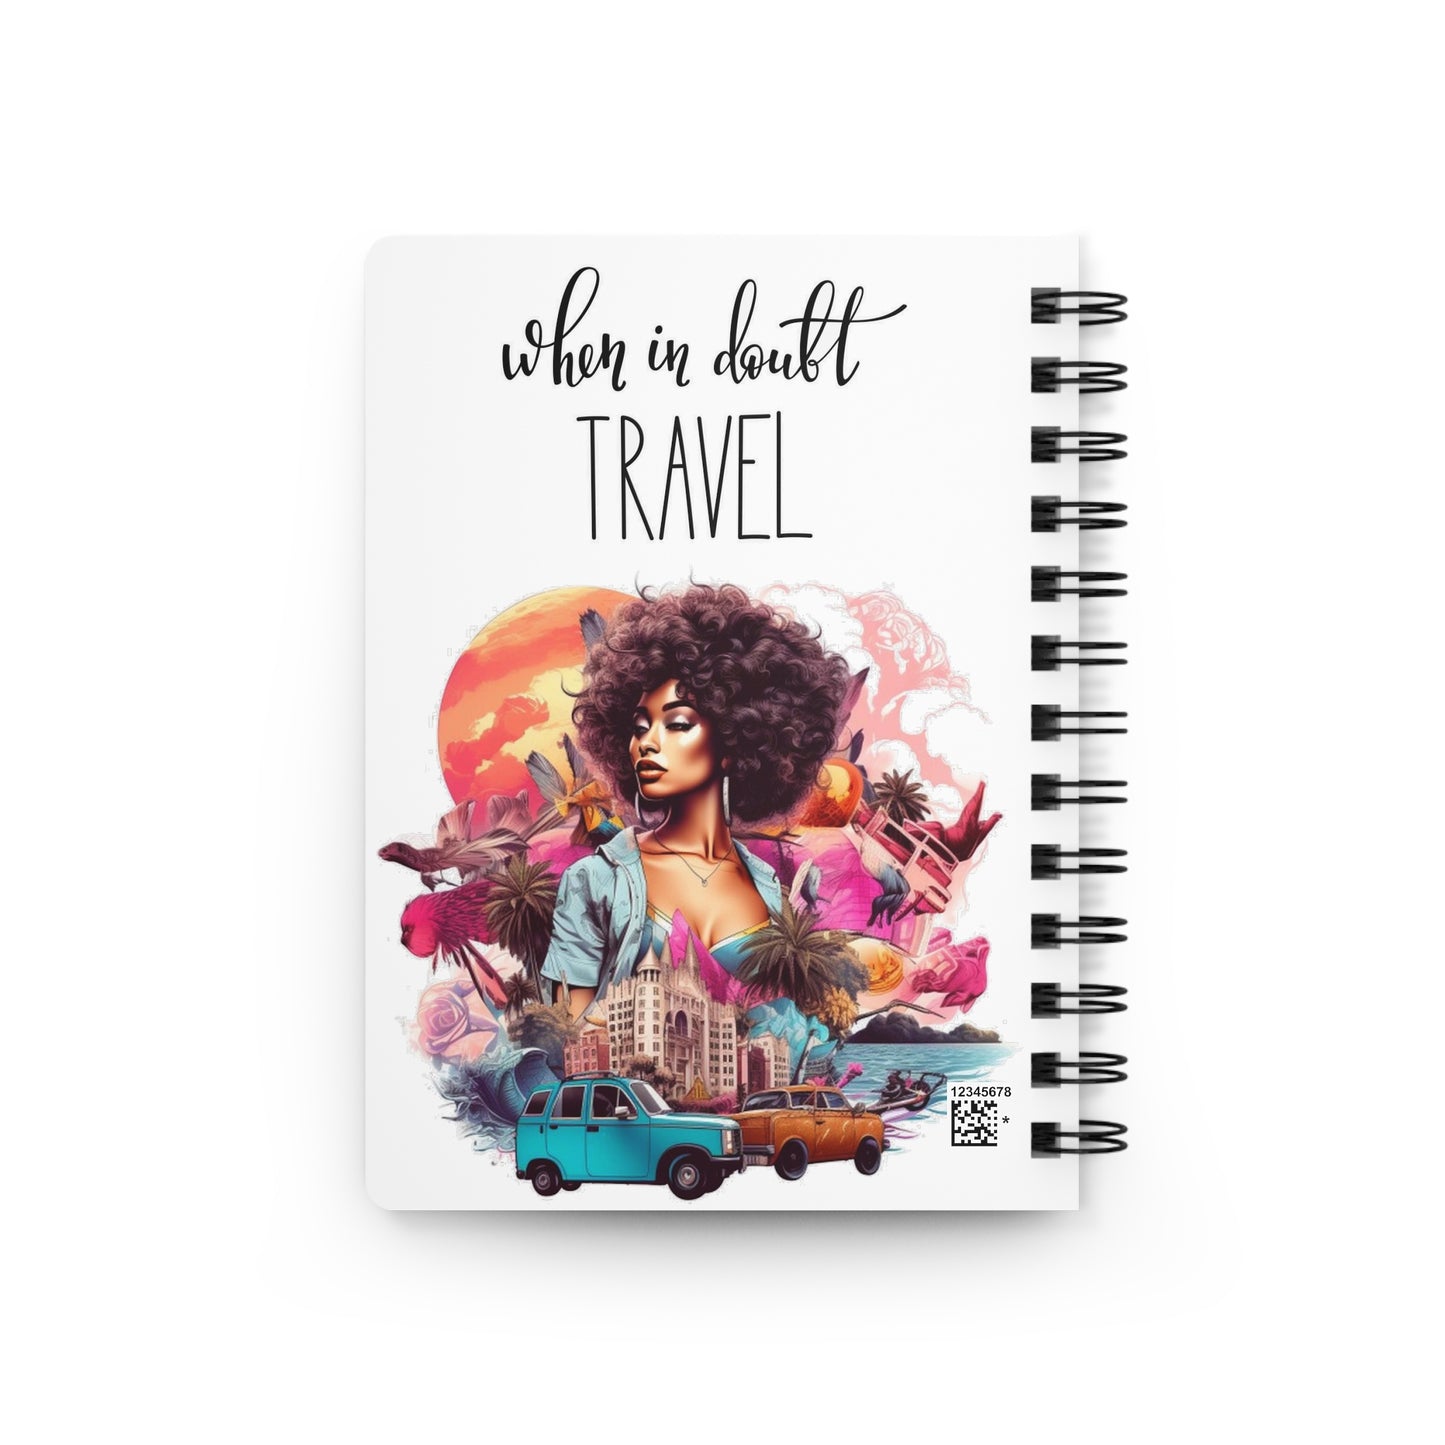 Traveler's Spiral-Bound Journal: Capture Your Journey (WHEN IN DOUBT, TRAVEL)